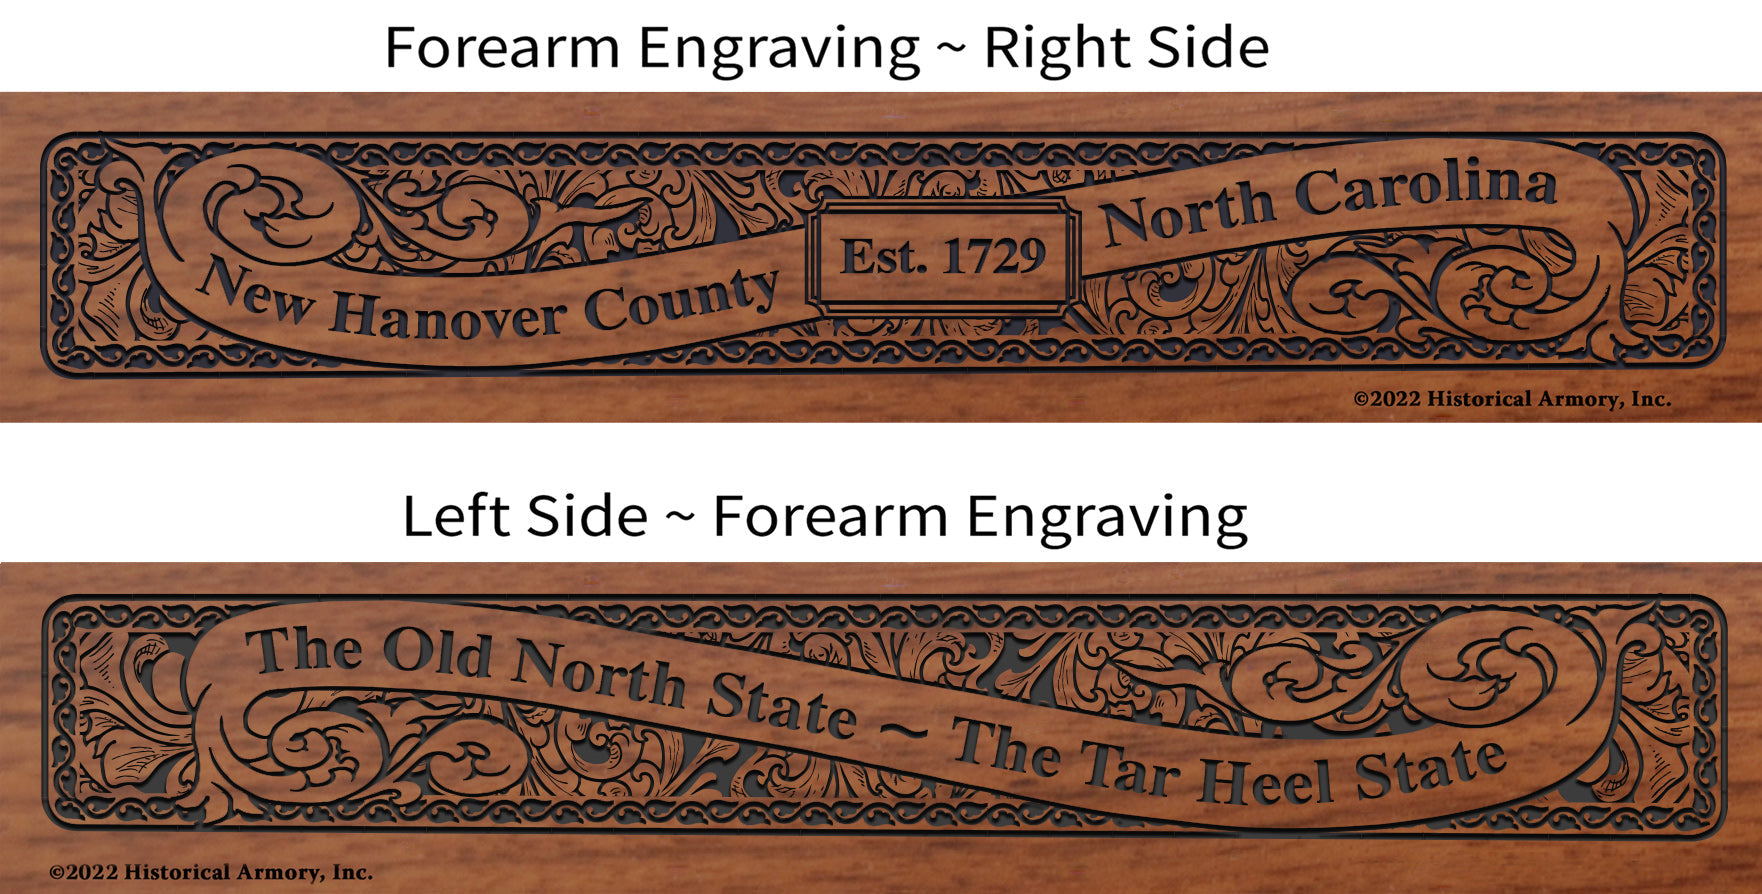 New Hanover County North Carolina Engraved Rifle Forearm